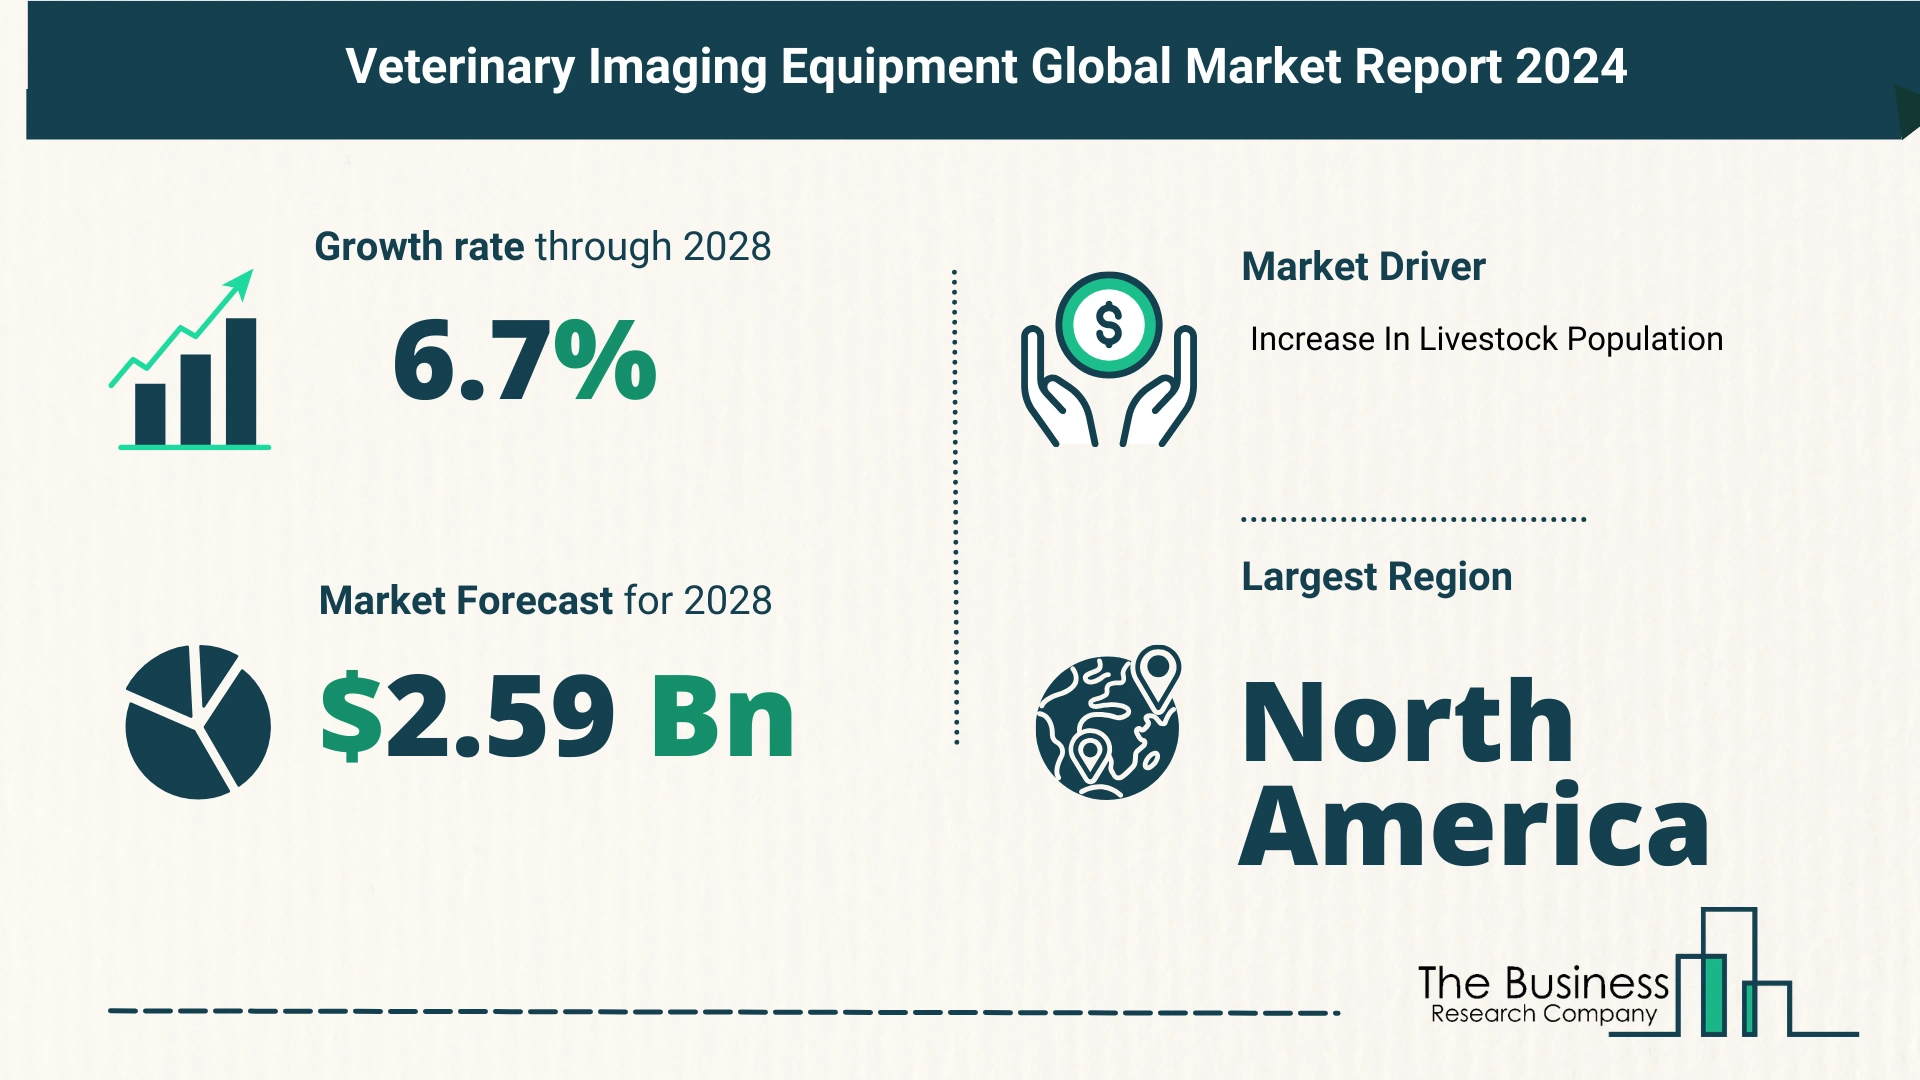 Global Veterinary Imaging Equipment Market Size